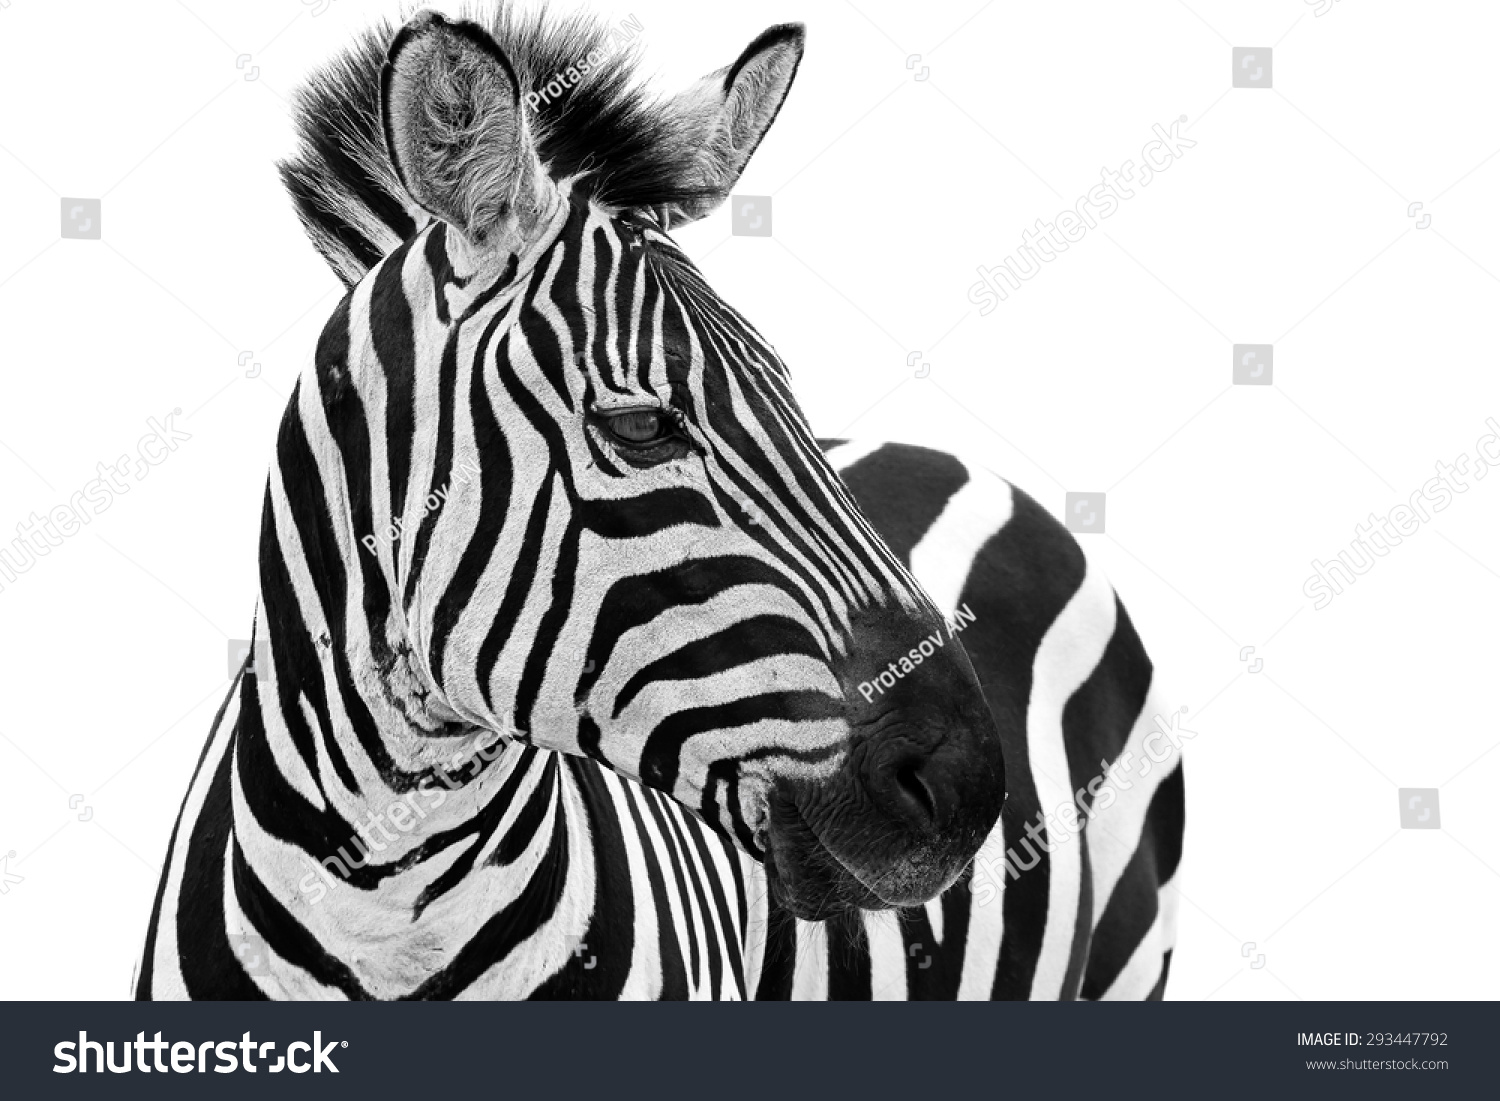 Zebra close up portrait. Zebra animal isolated on a white background  #293447792